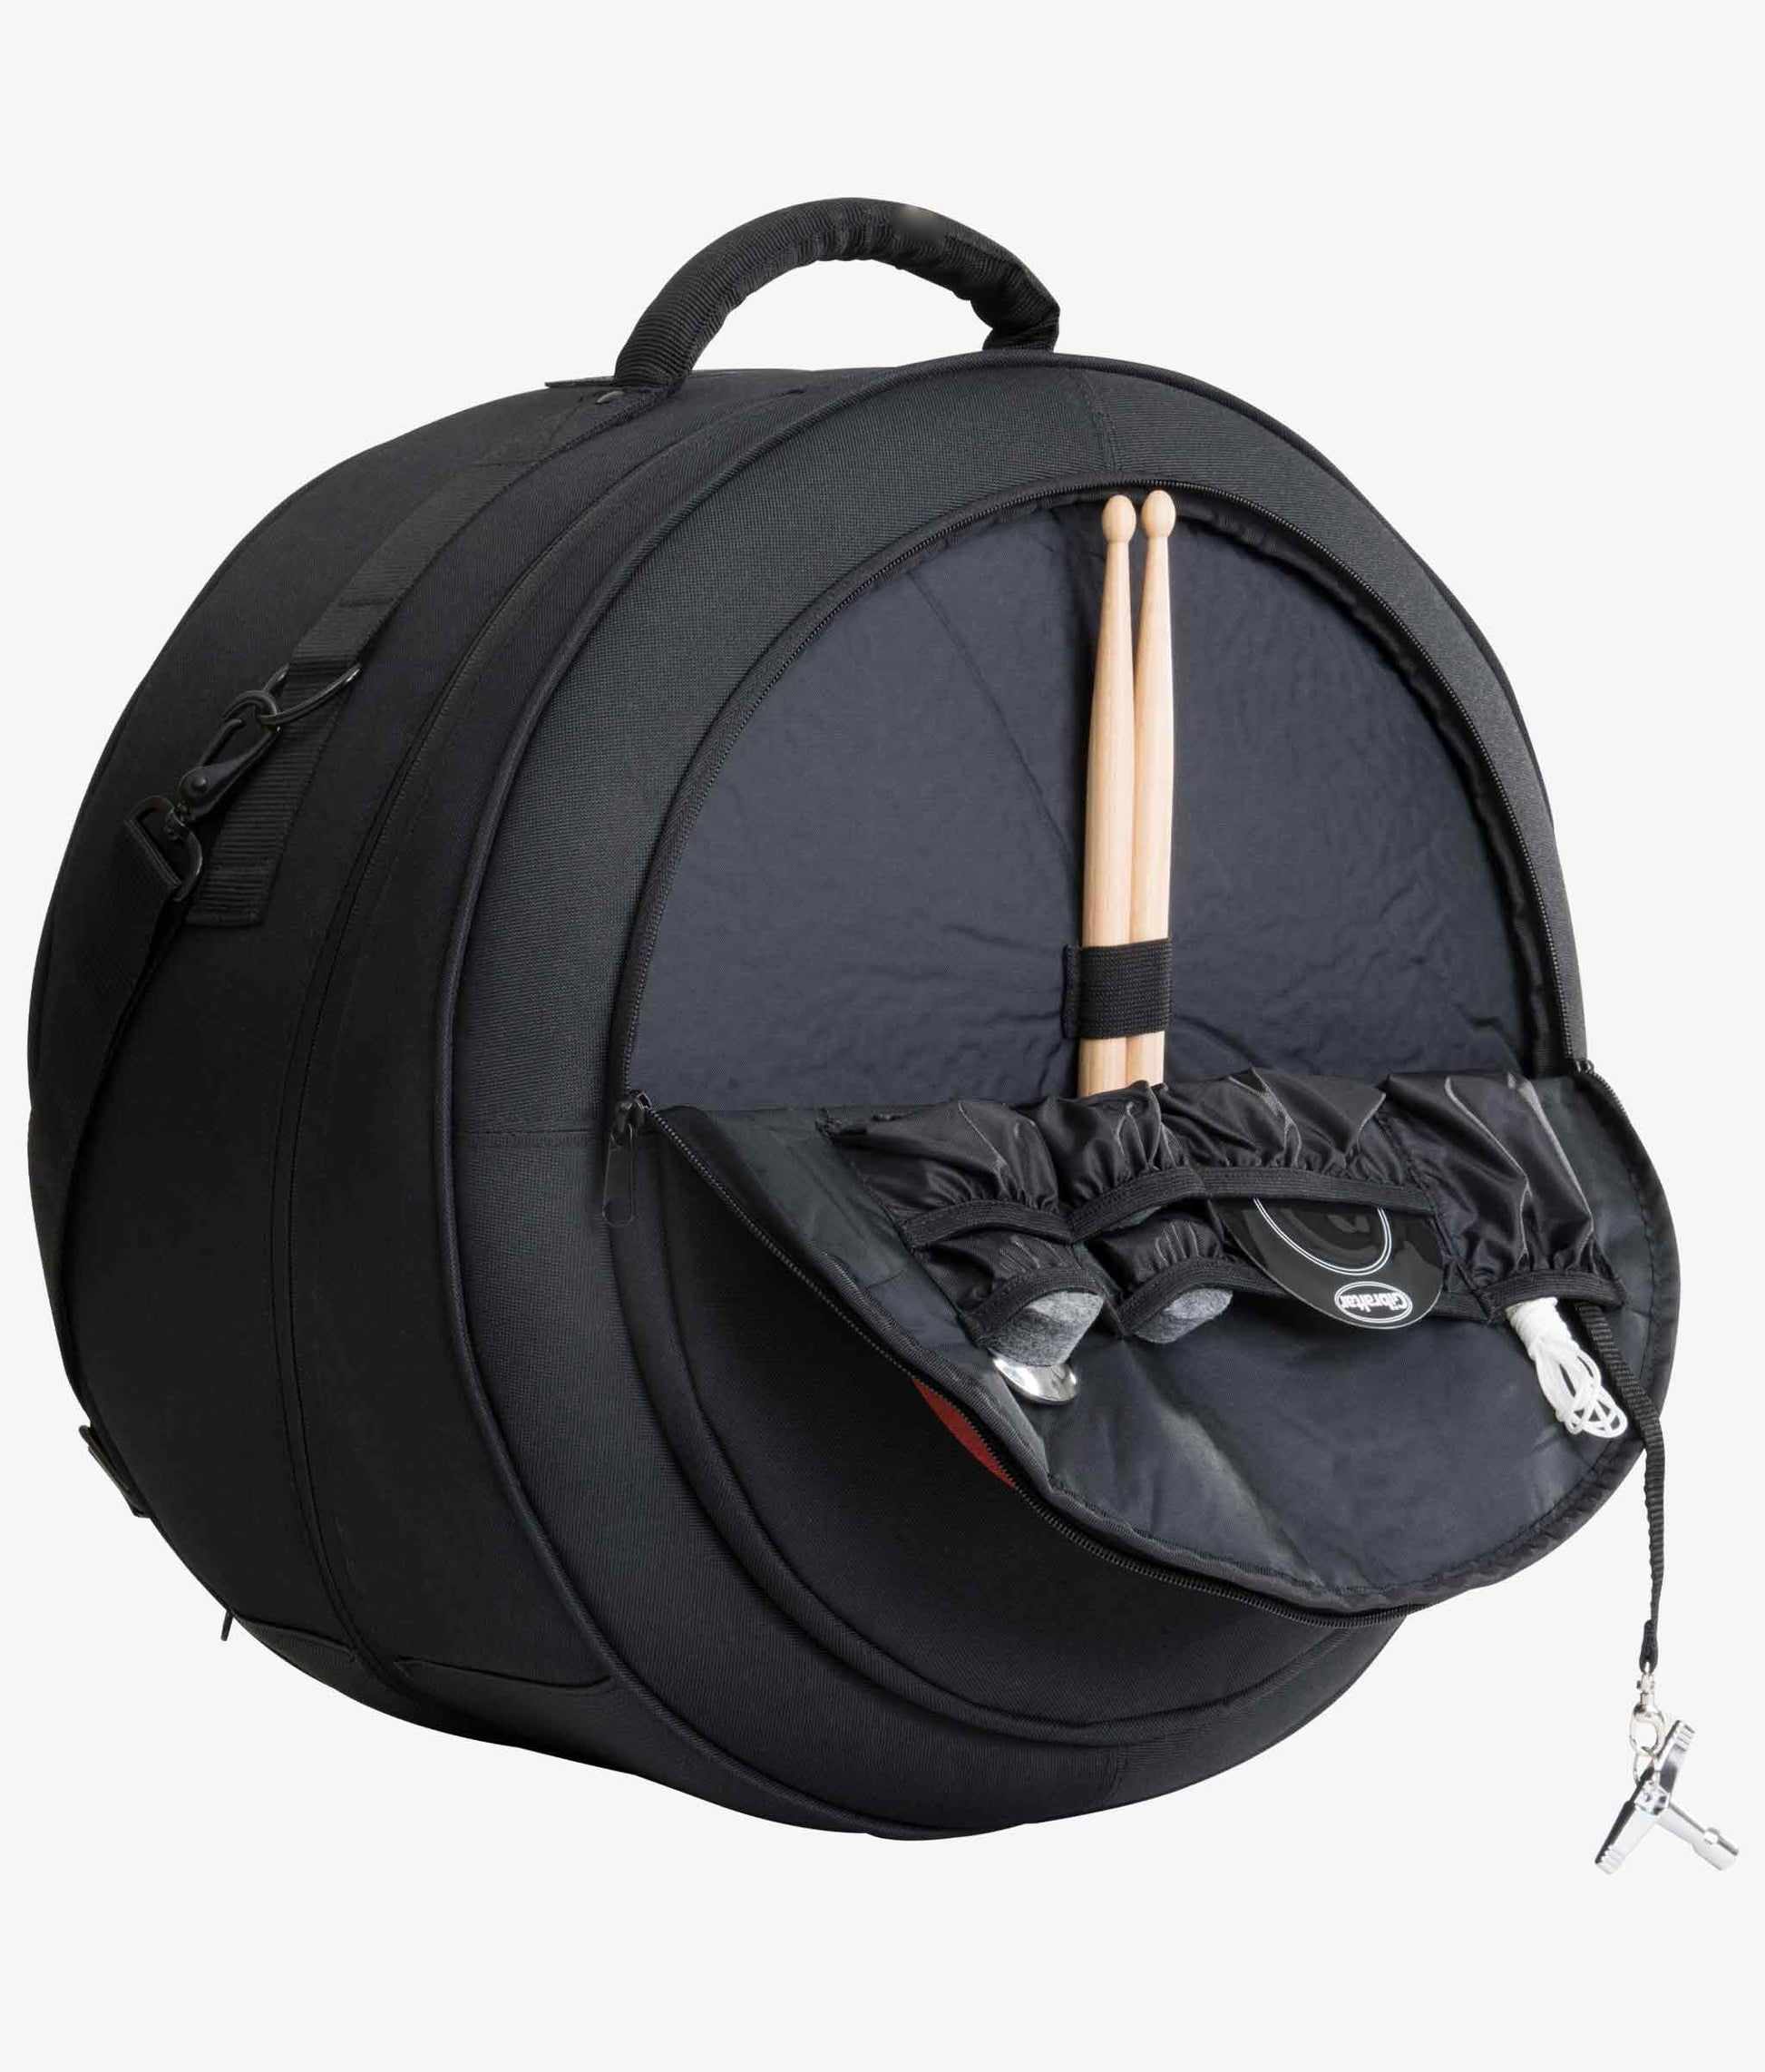  Gibraltar GPSBCZ 14" Deluxe Snare Drum Bag, Cross-Cut Zipper snare drum case